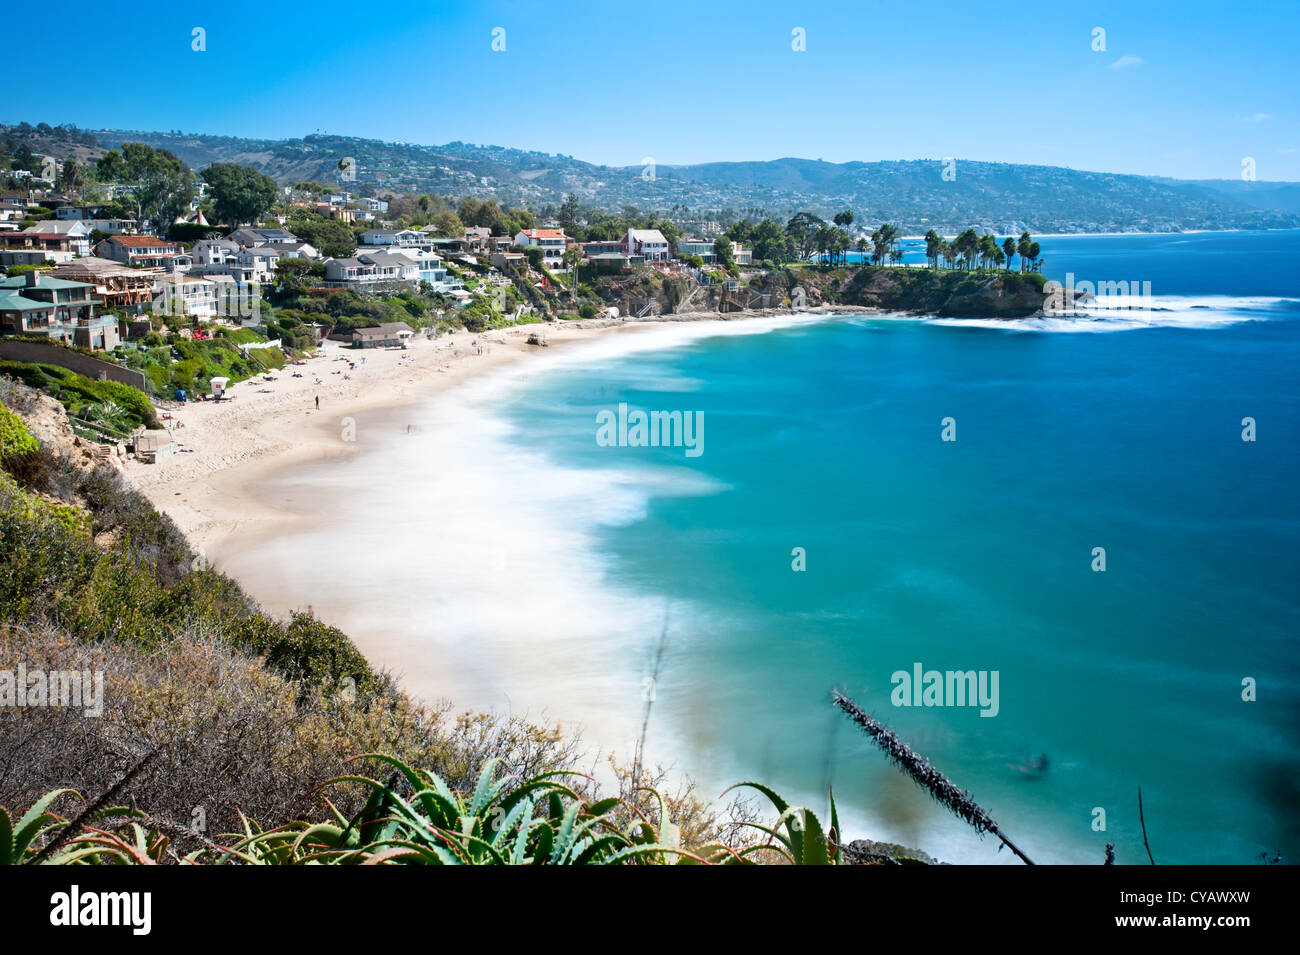 Una immagine di una bellissima insenatura denominata Crescent Bay in Laguna Beach in California. Foto Stock